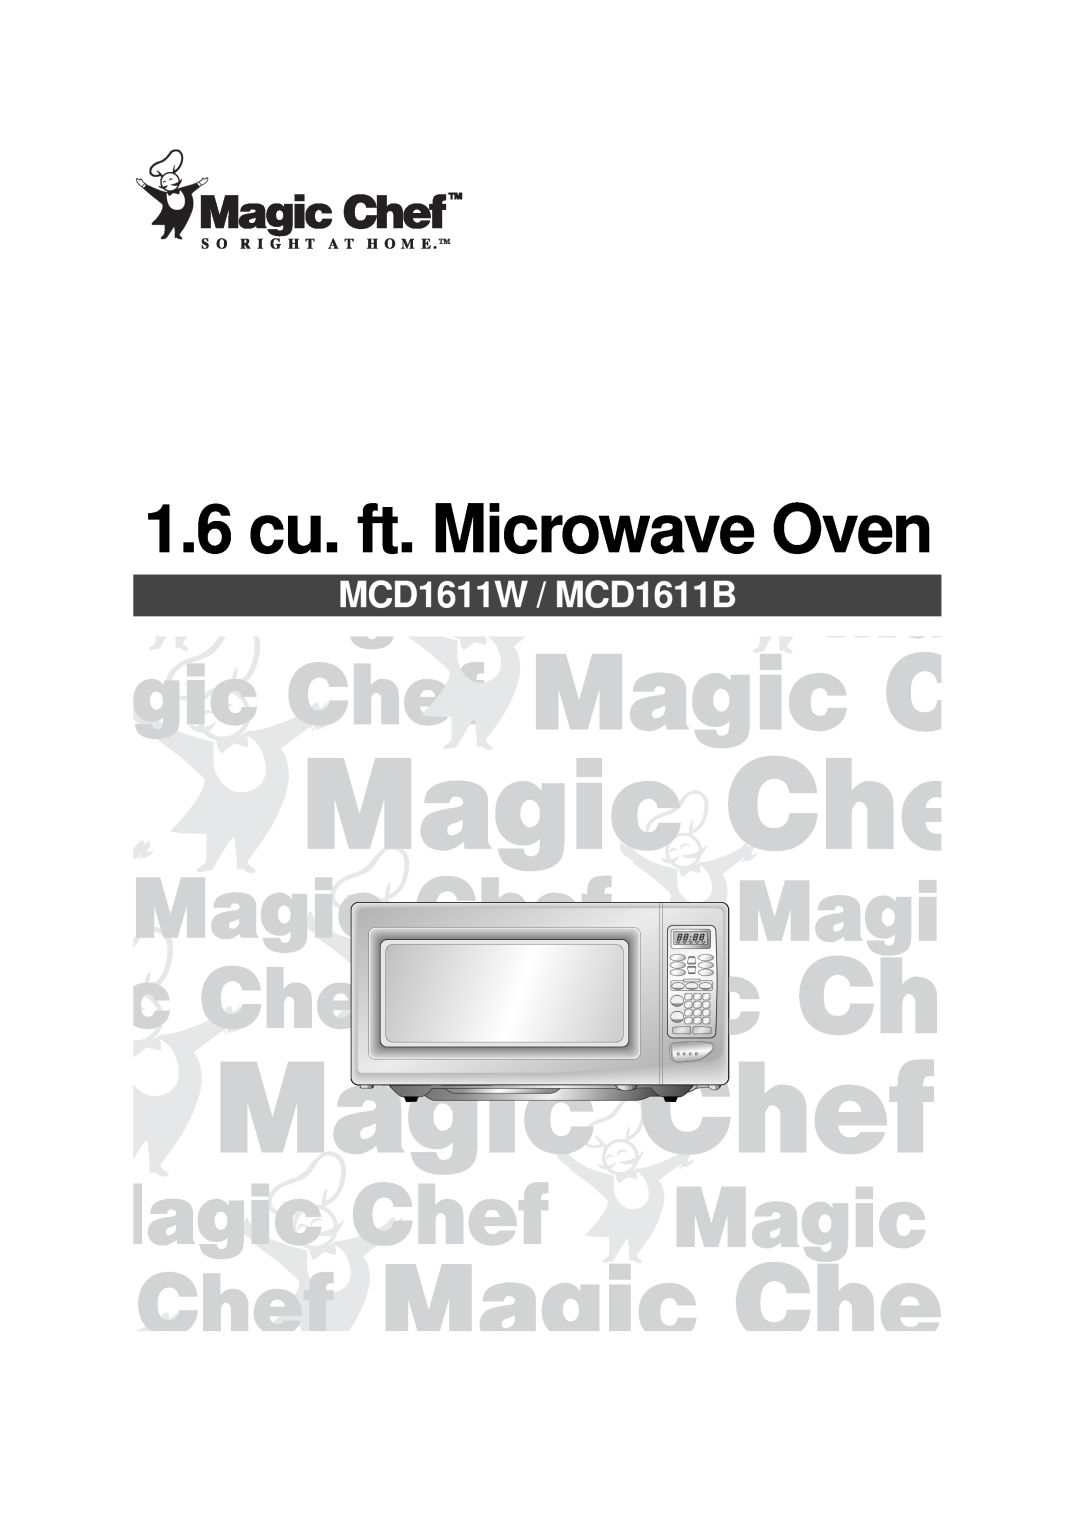 Magic Chef manual 1.6 cu. ft. Microwave Oven, MCD1611W / MCD1611B 